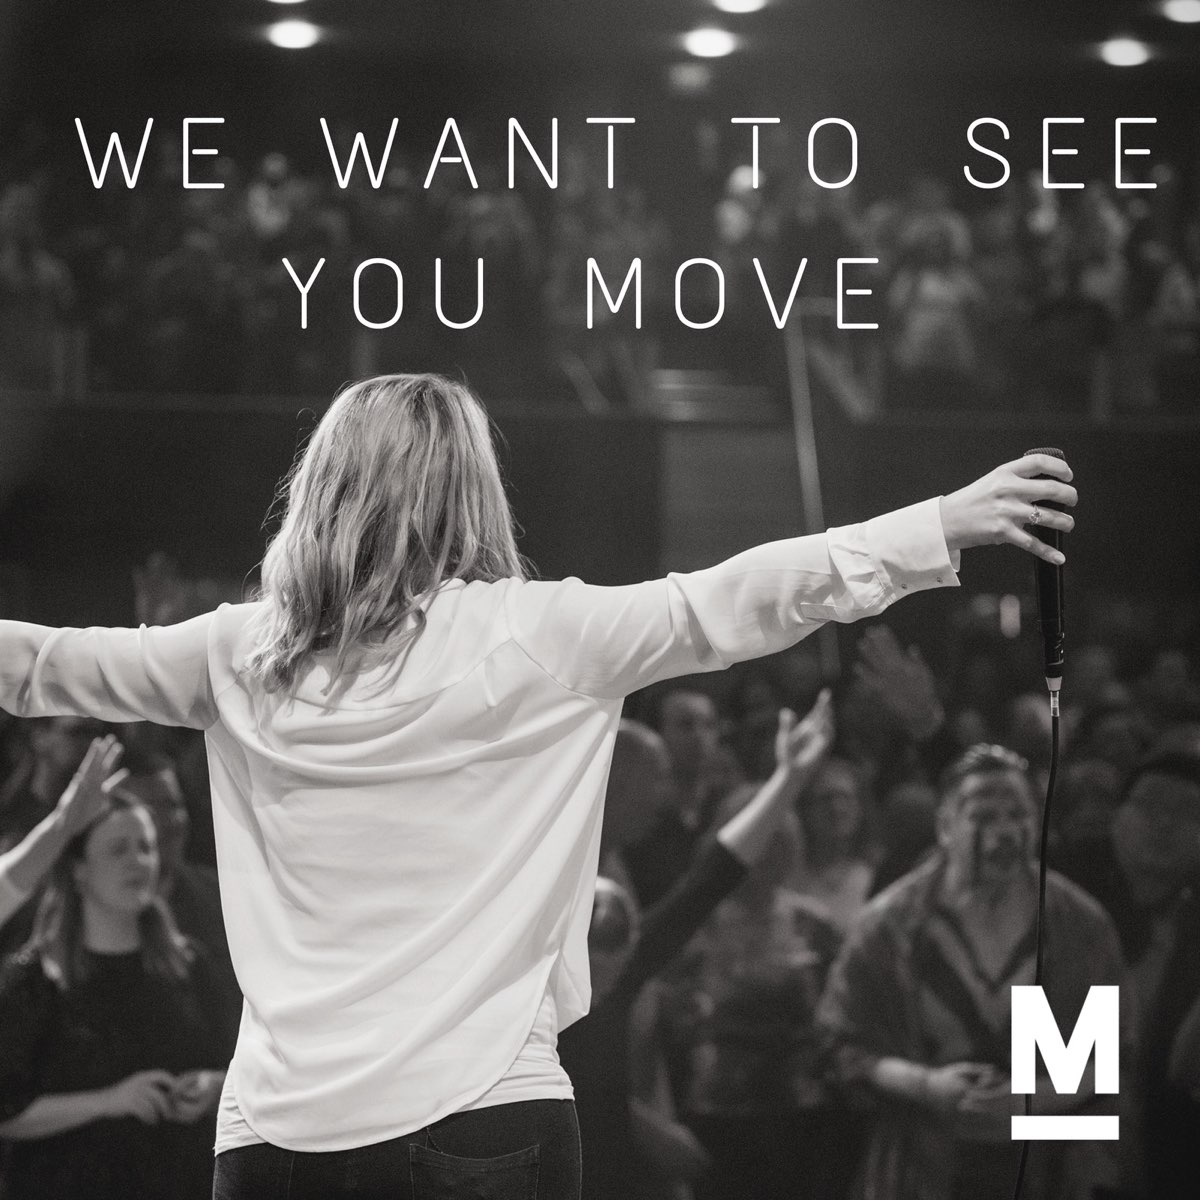 Live move now. Move you. Move Live.